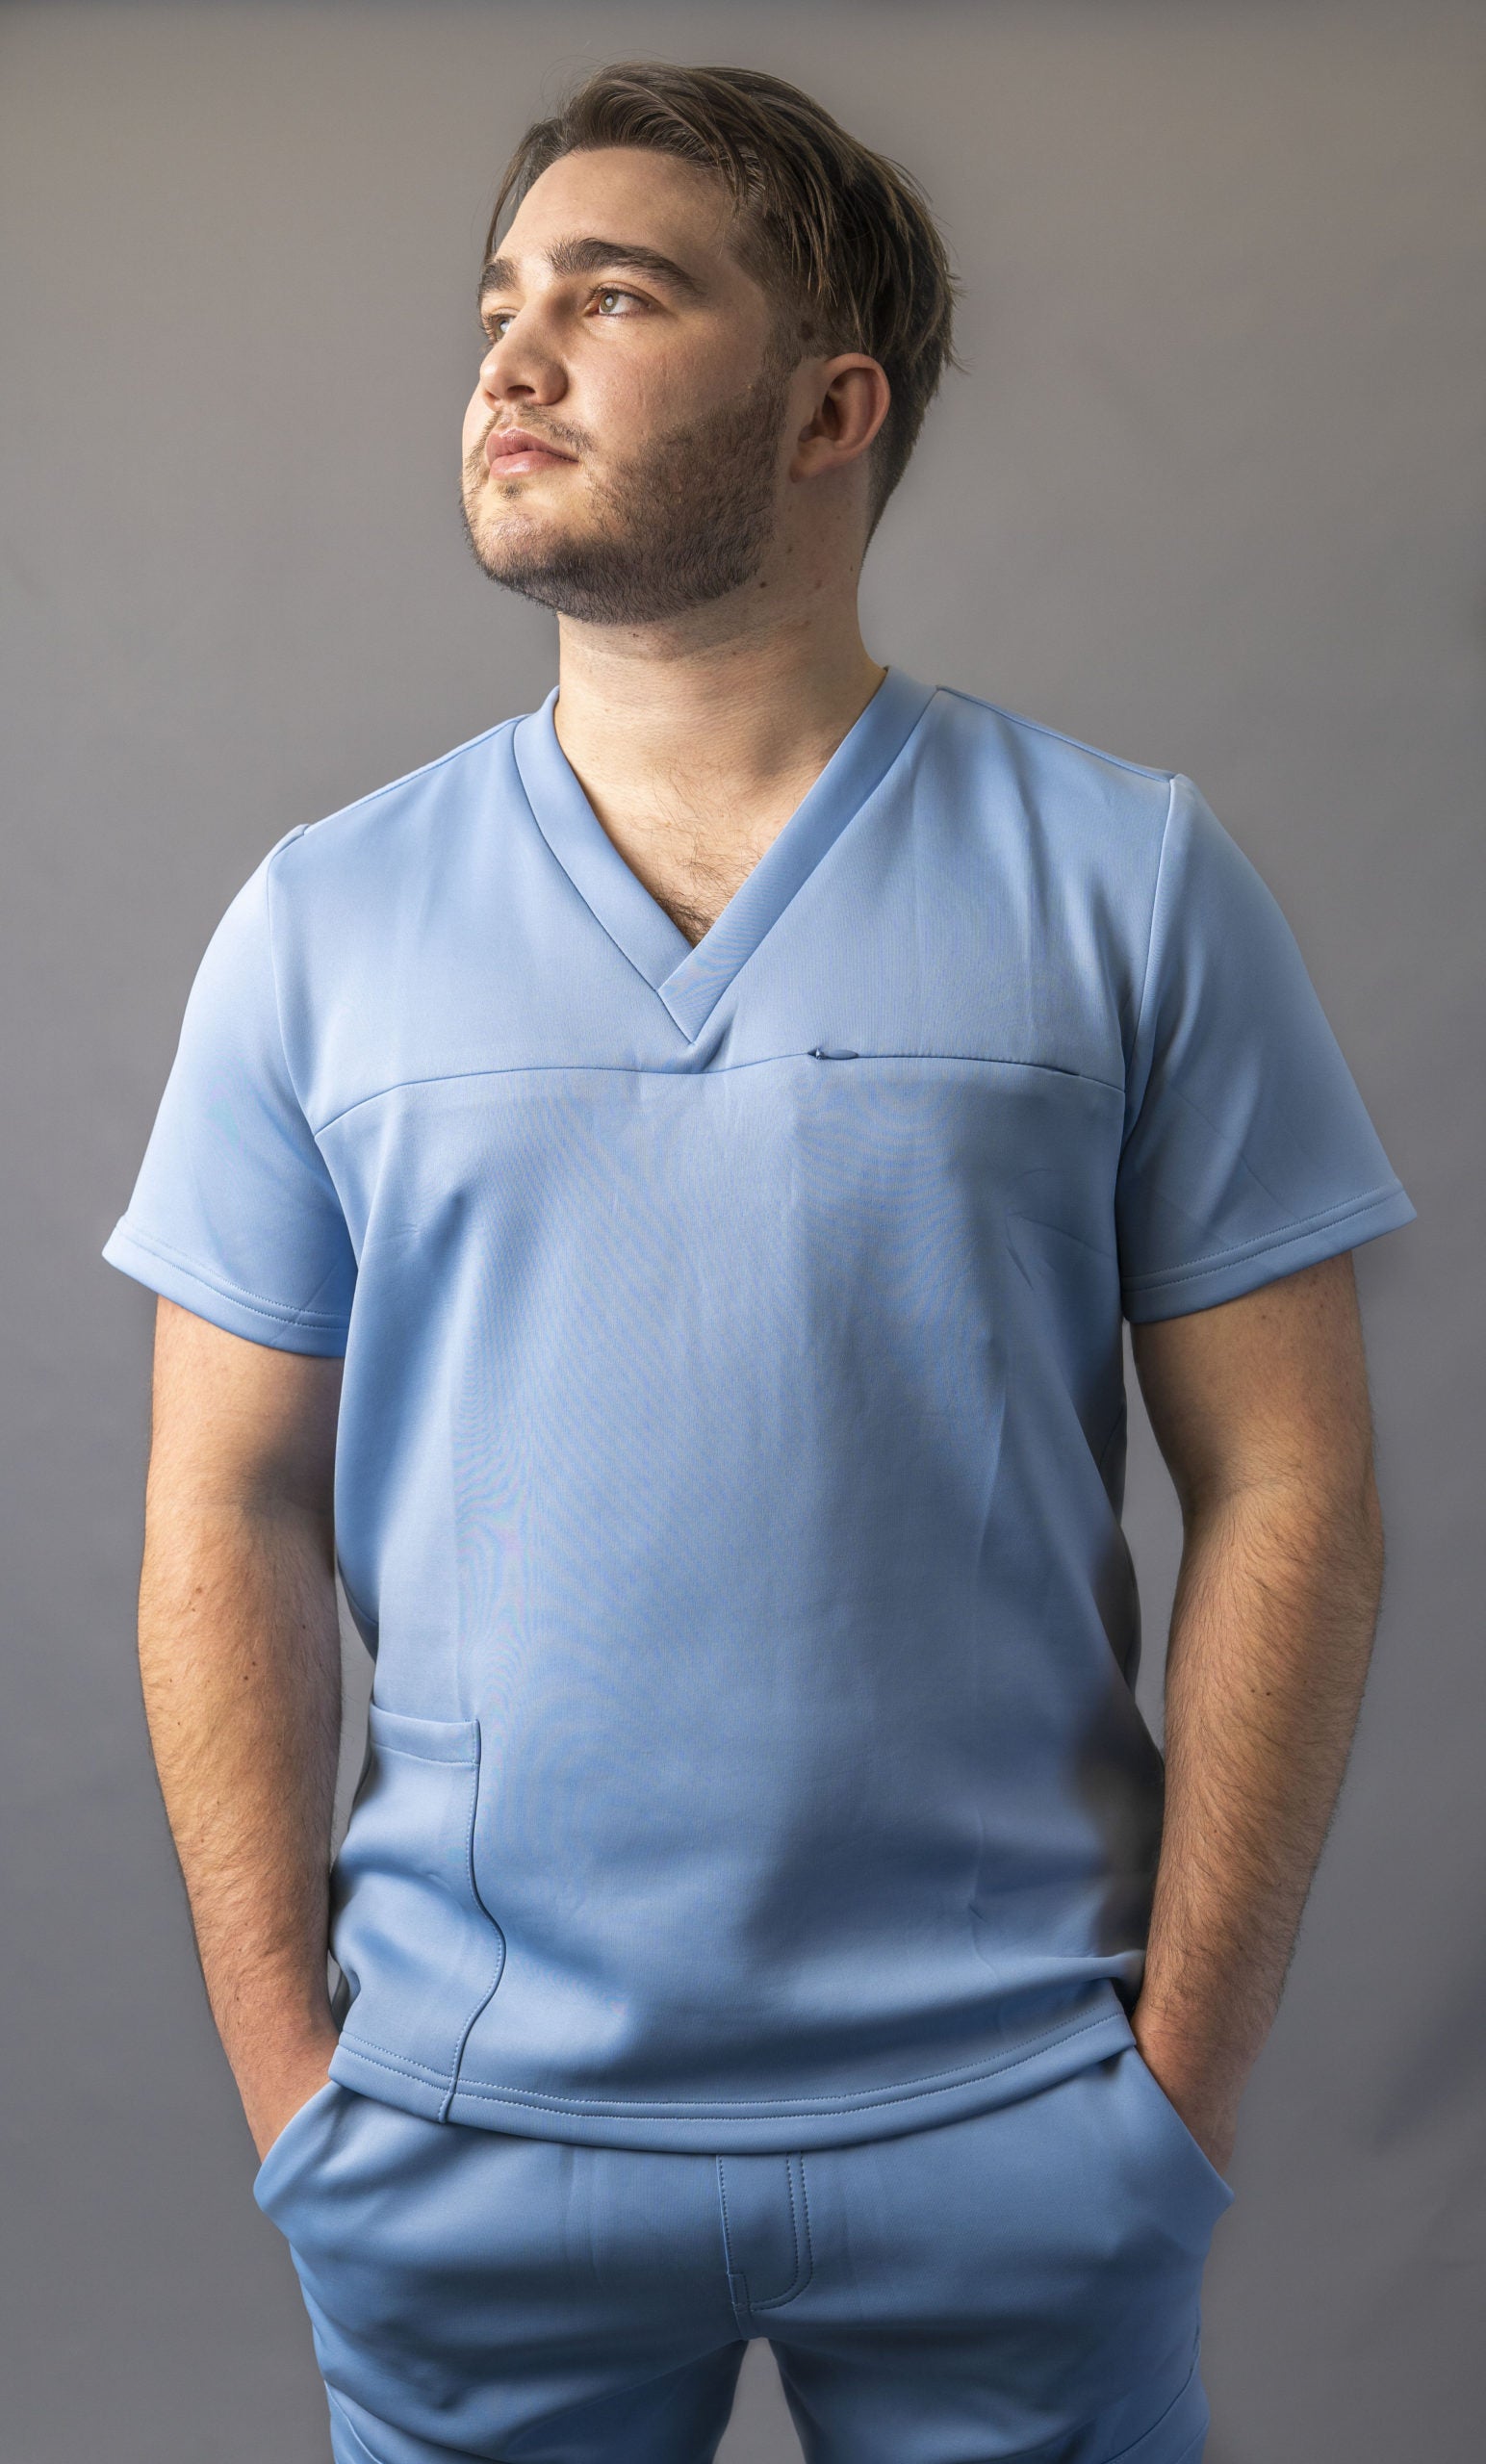 High-quality men's medical scrubs